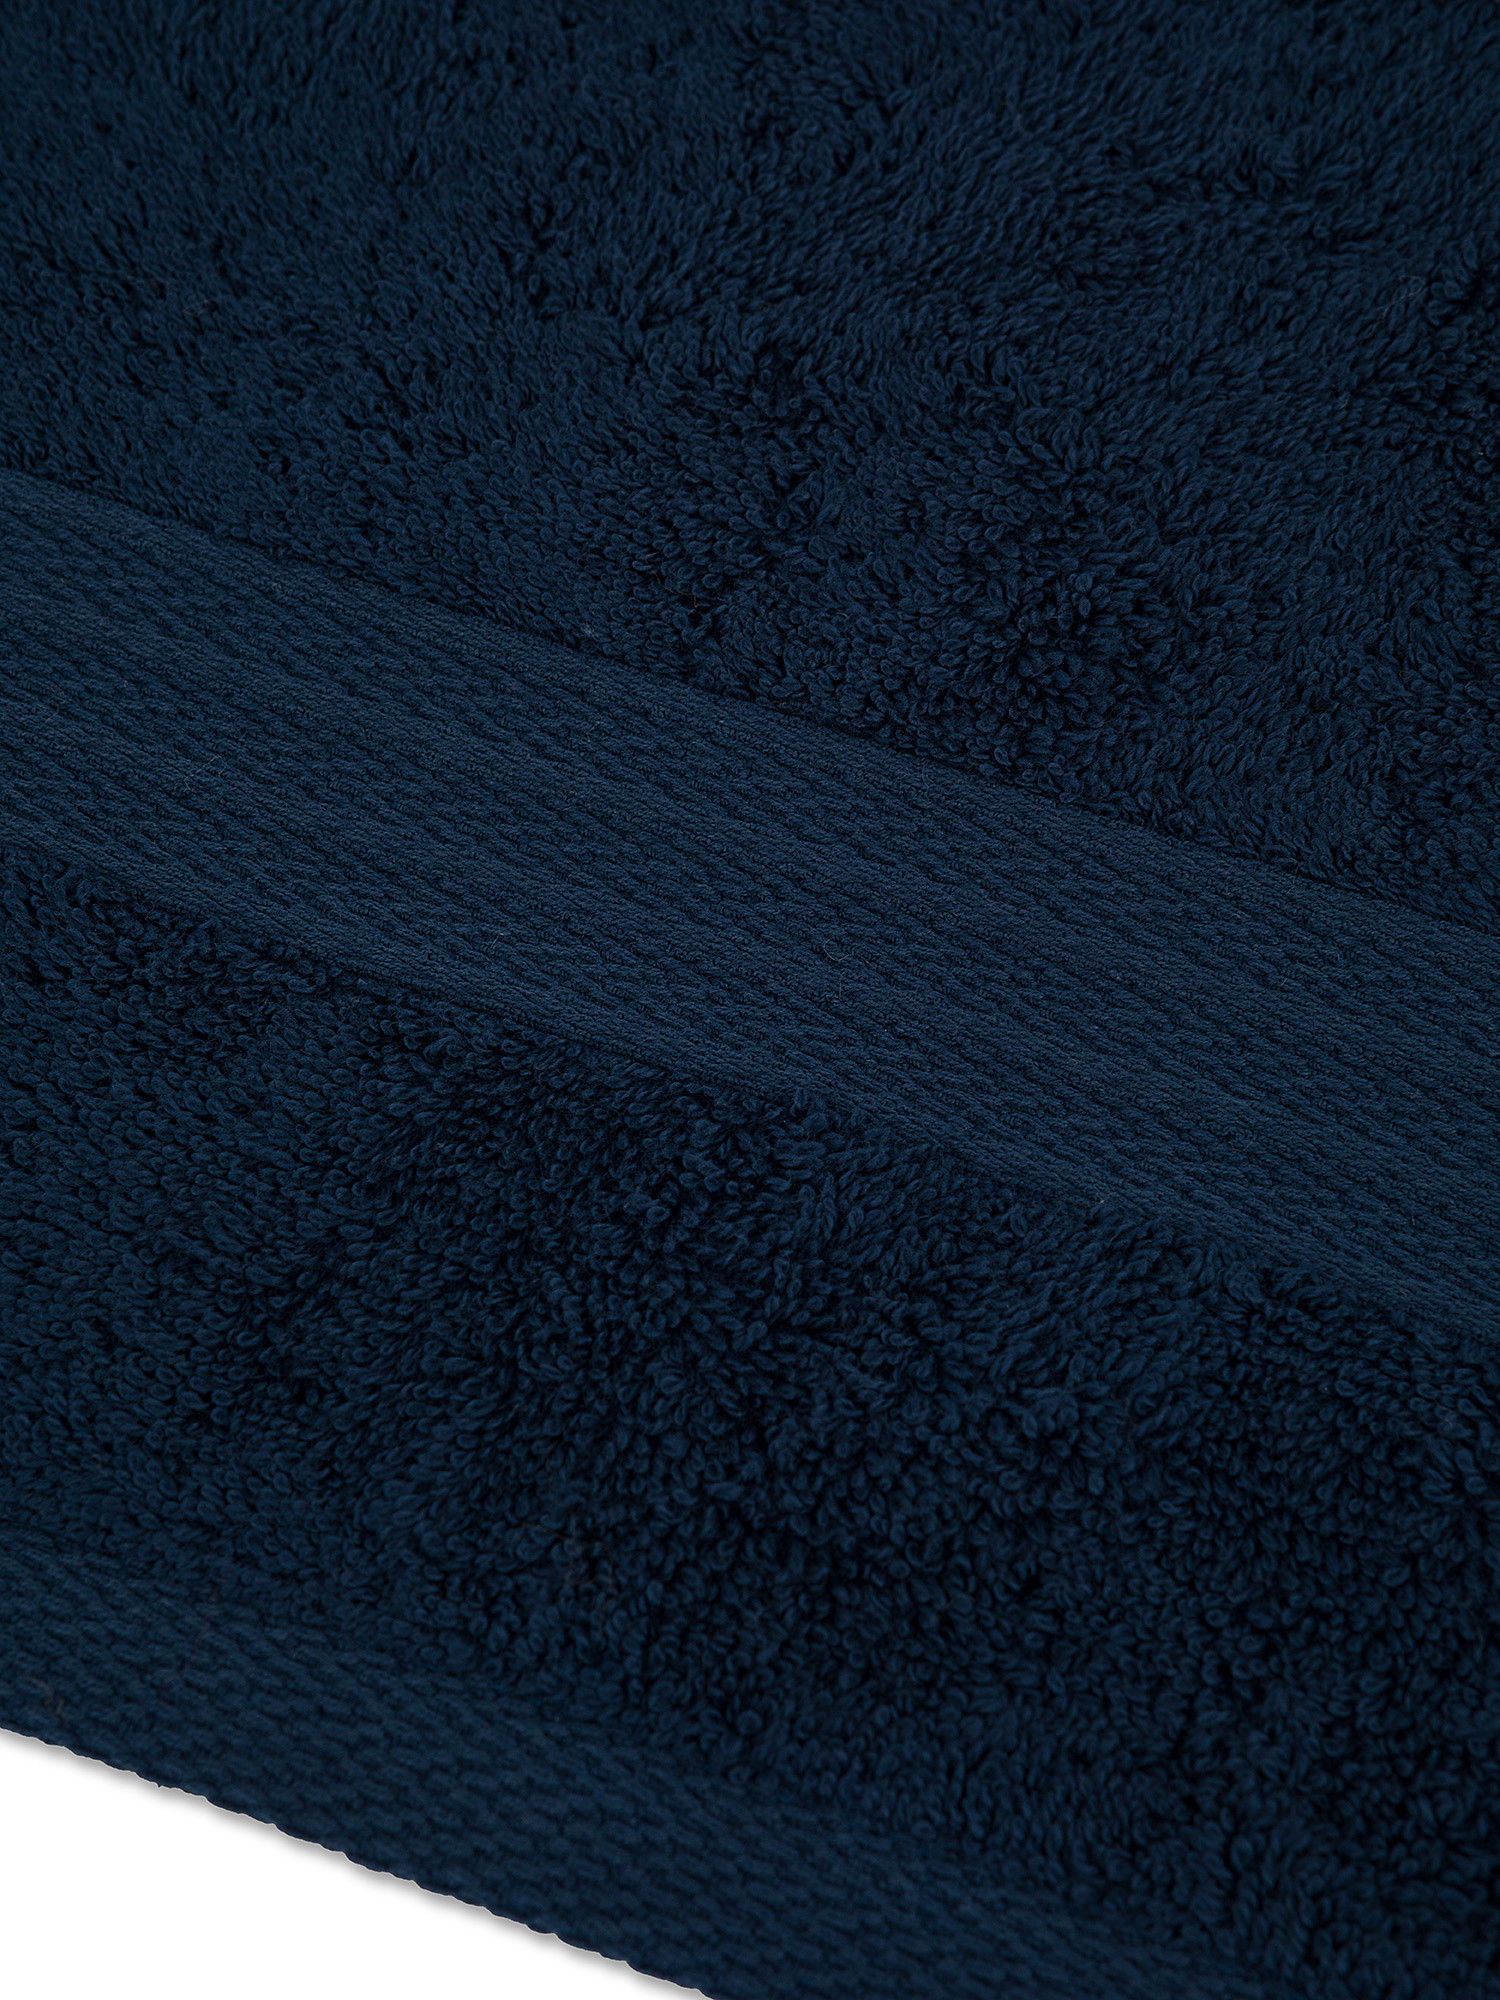 Asciugamano puro cotone tinta unita Zefiro, Blu scuro, large image number 2